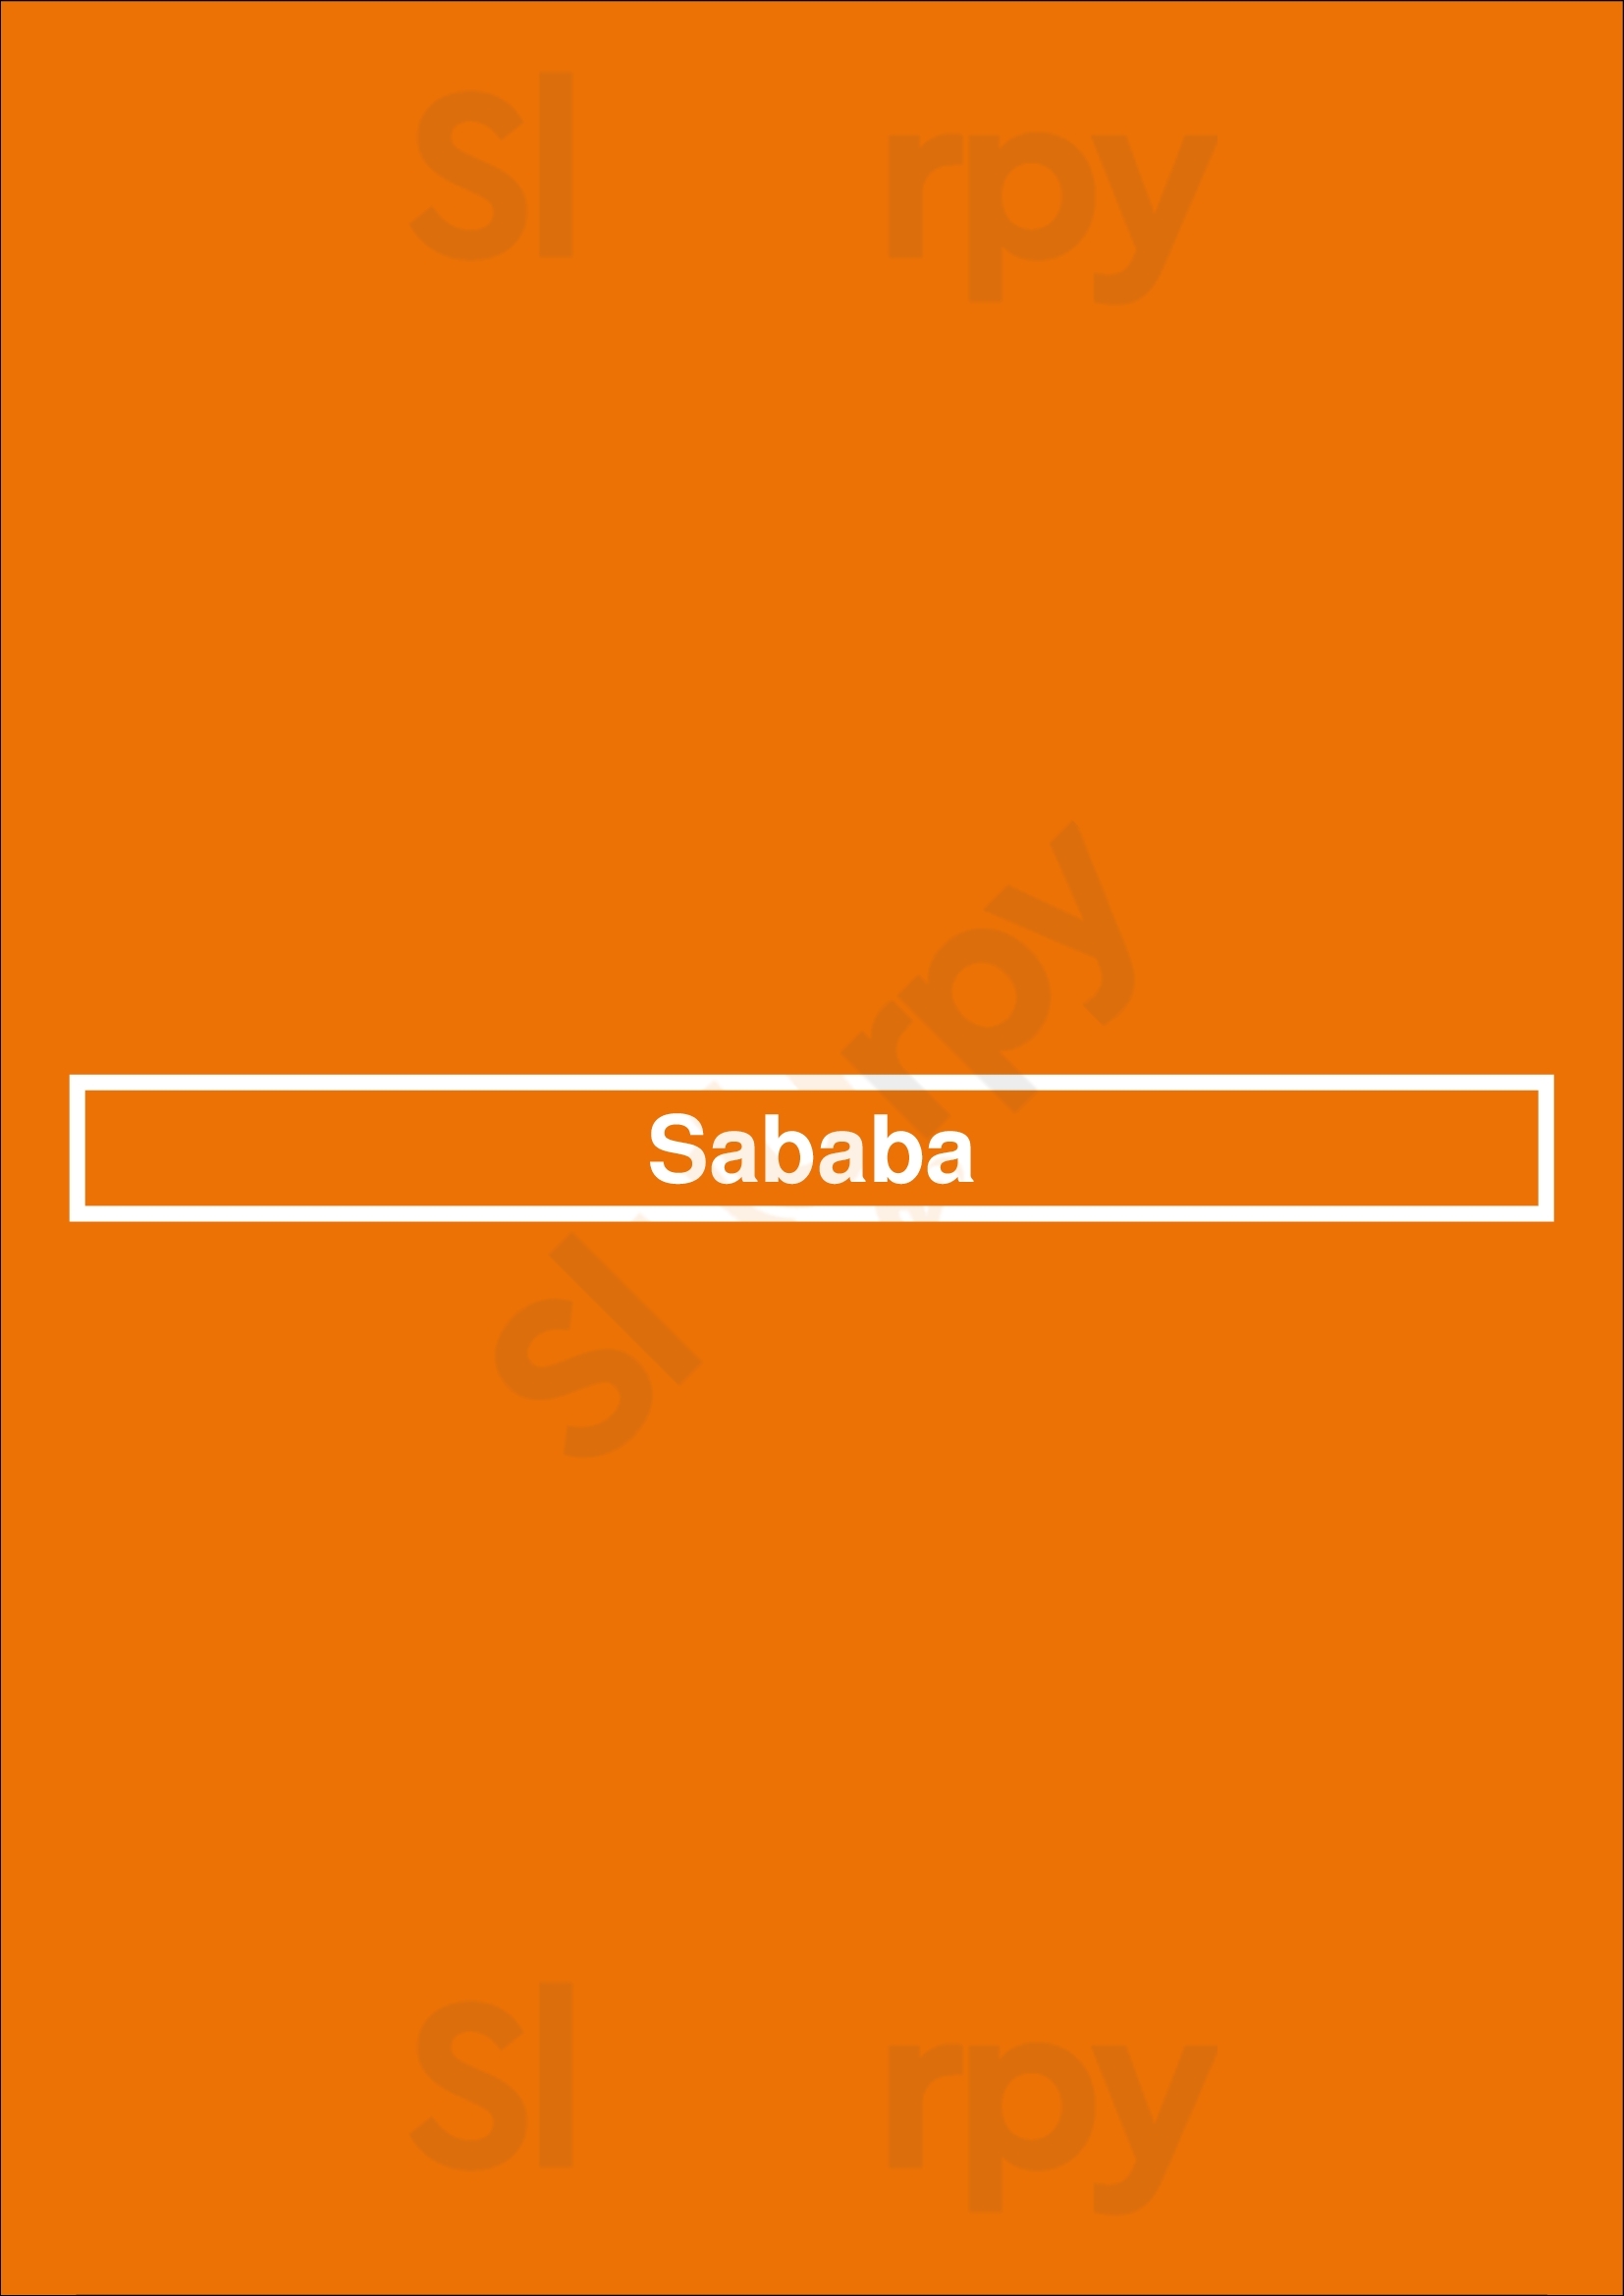 Sababa Columbus Menu - 1